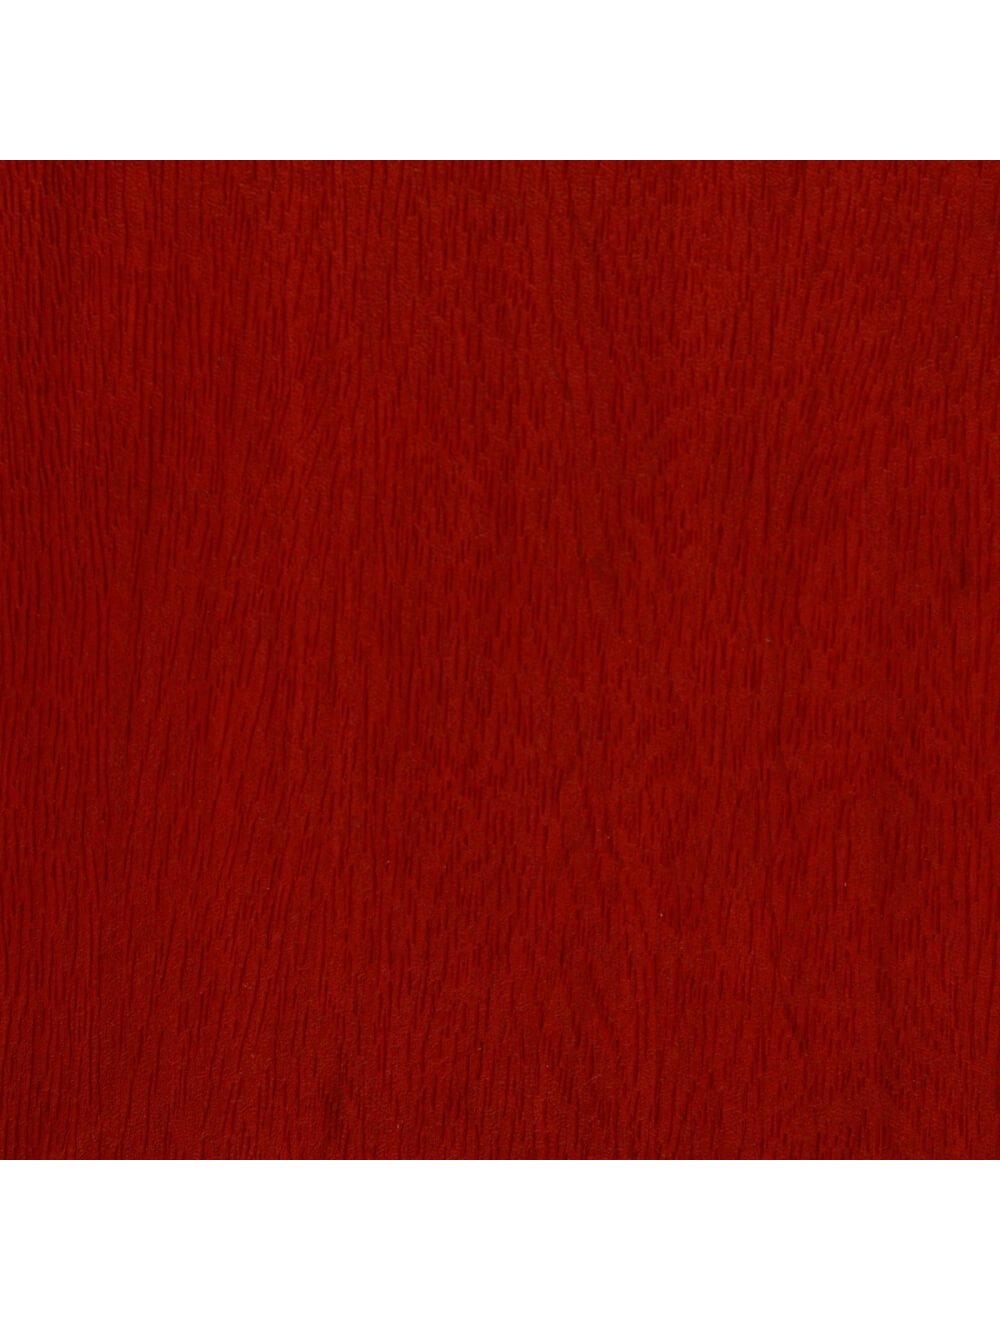 Materiaalstaal Washington rood houtnerf (E948)